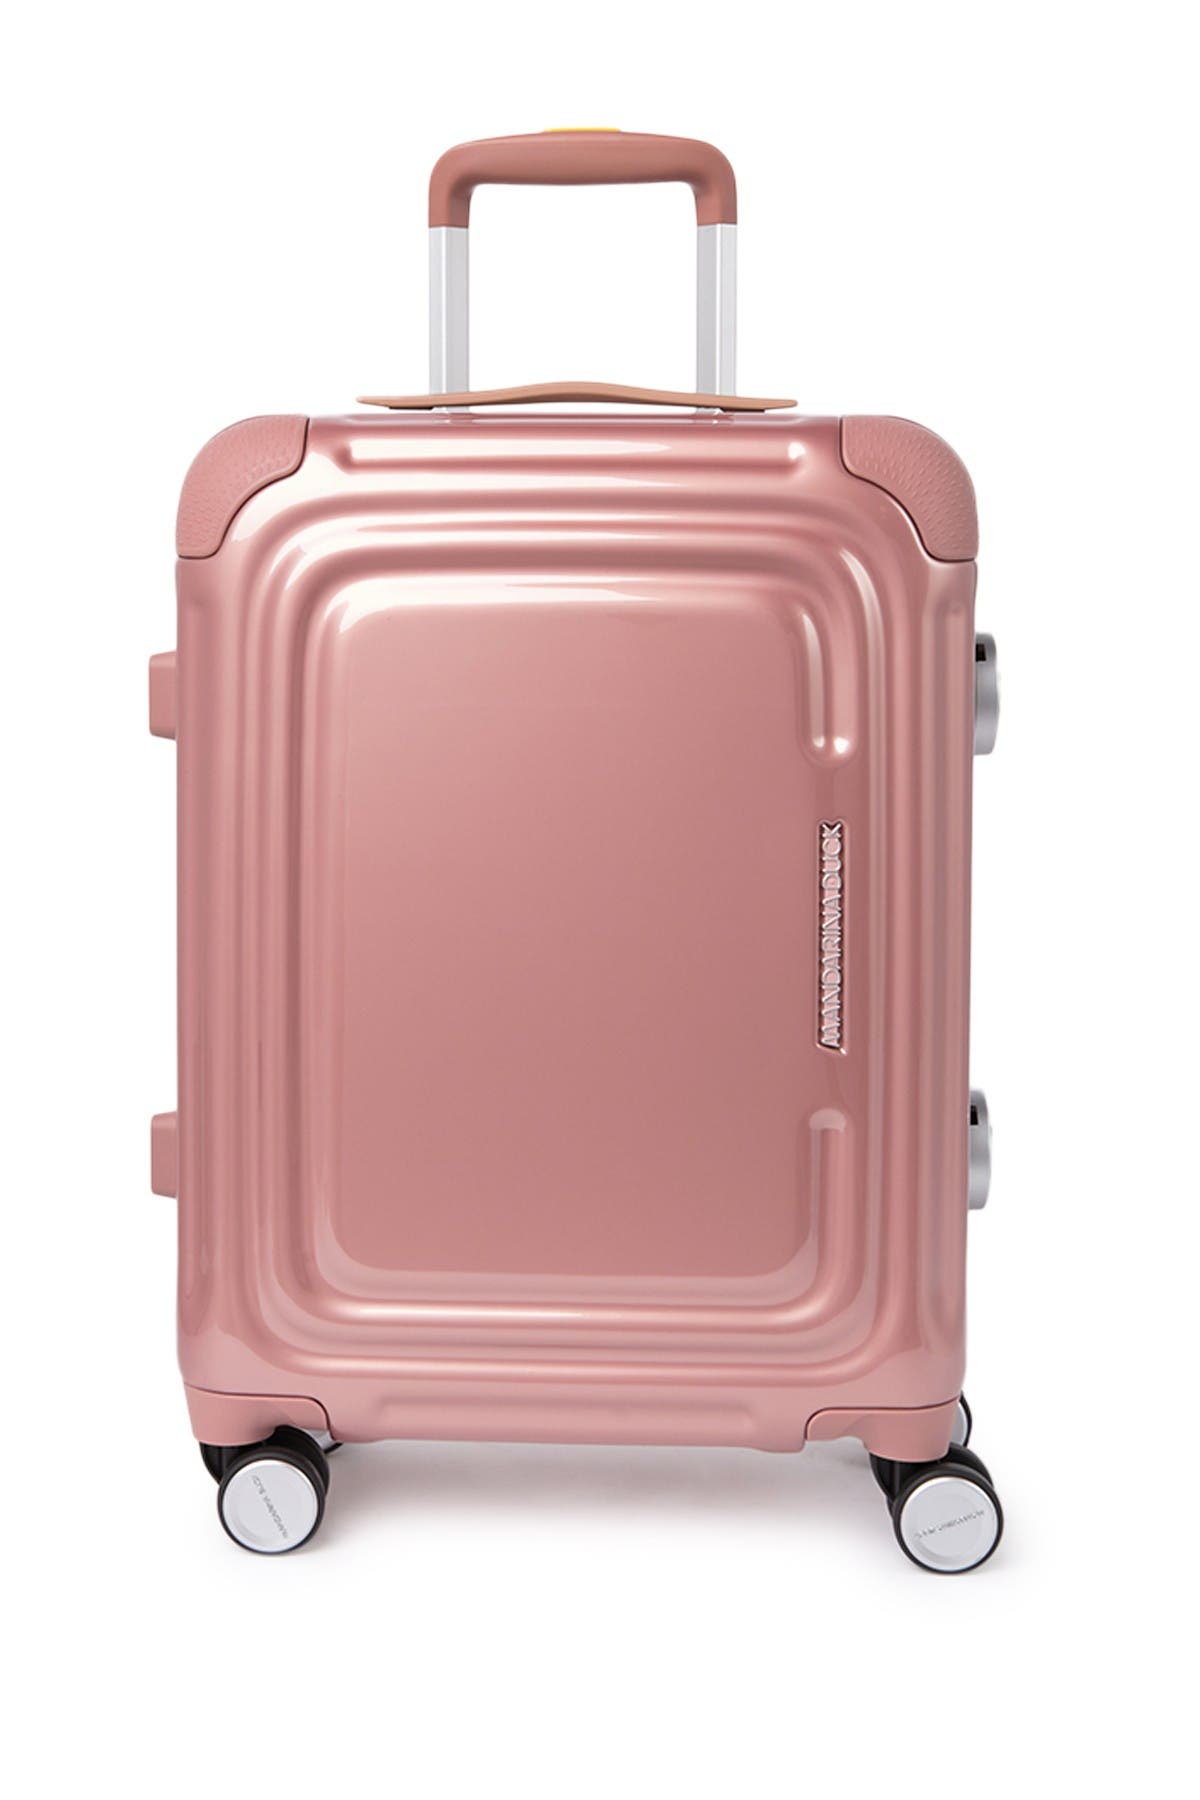 Mandarina Duck C-frame Cabin Low Trolley Hardshell Luggage In Rose Metal